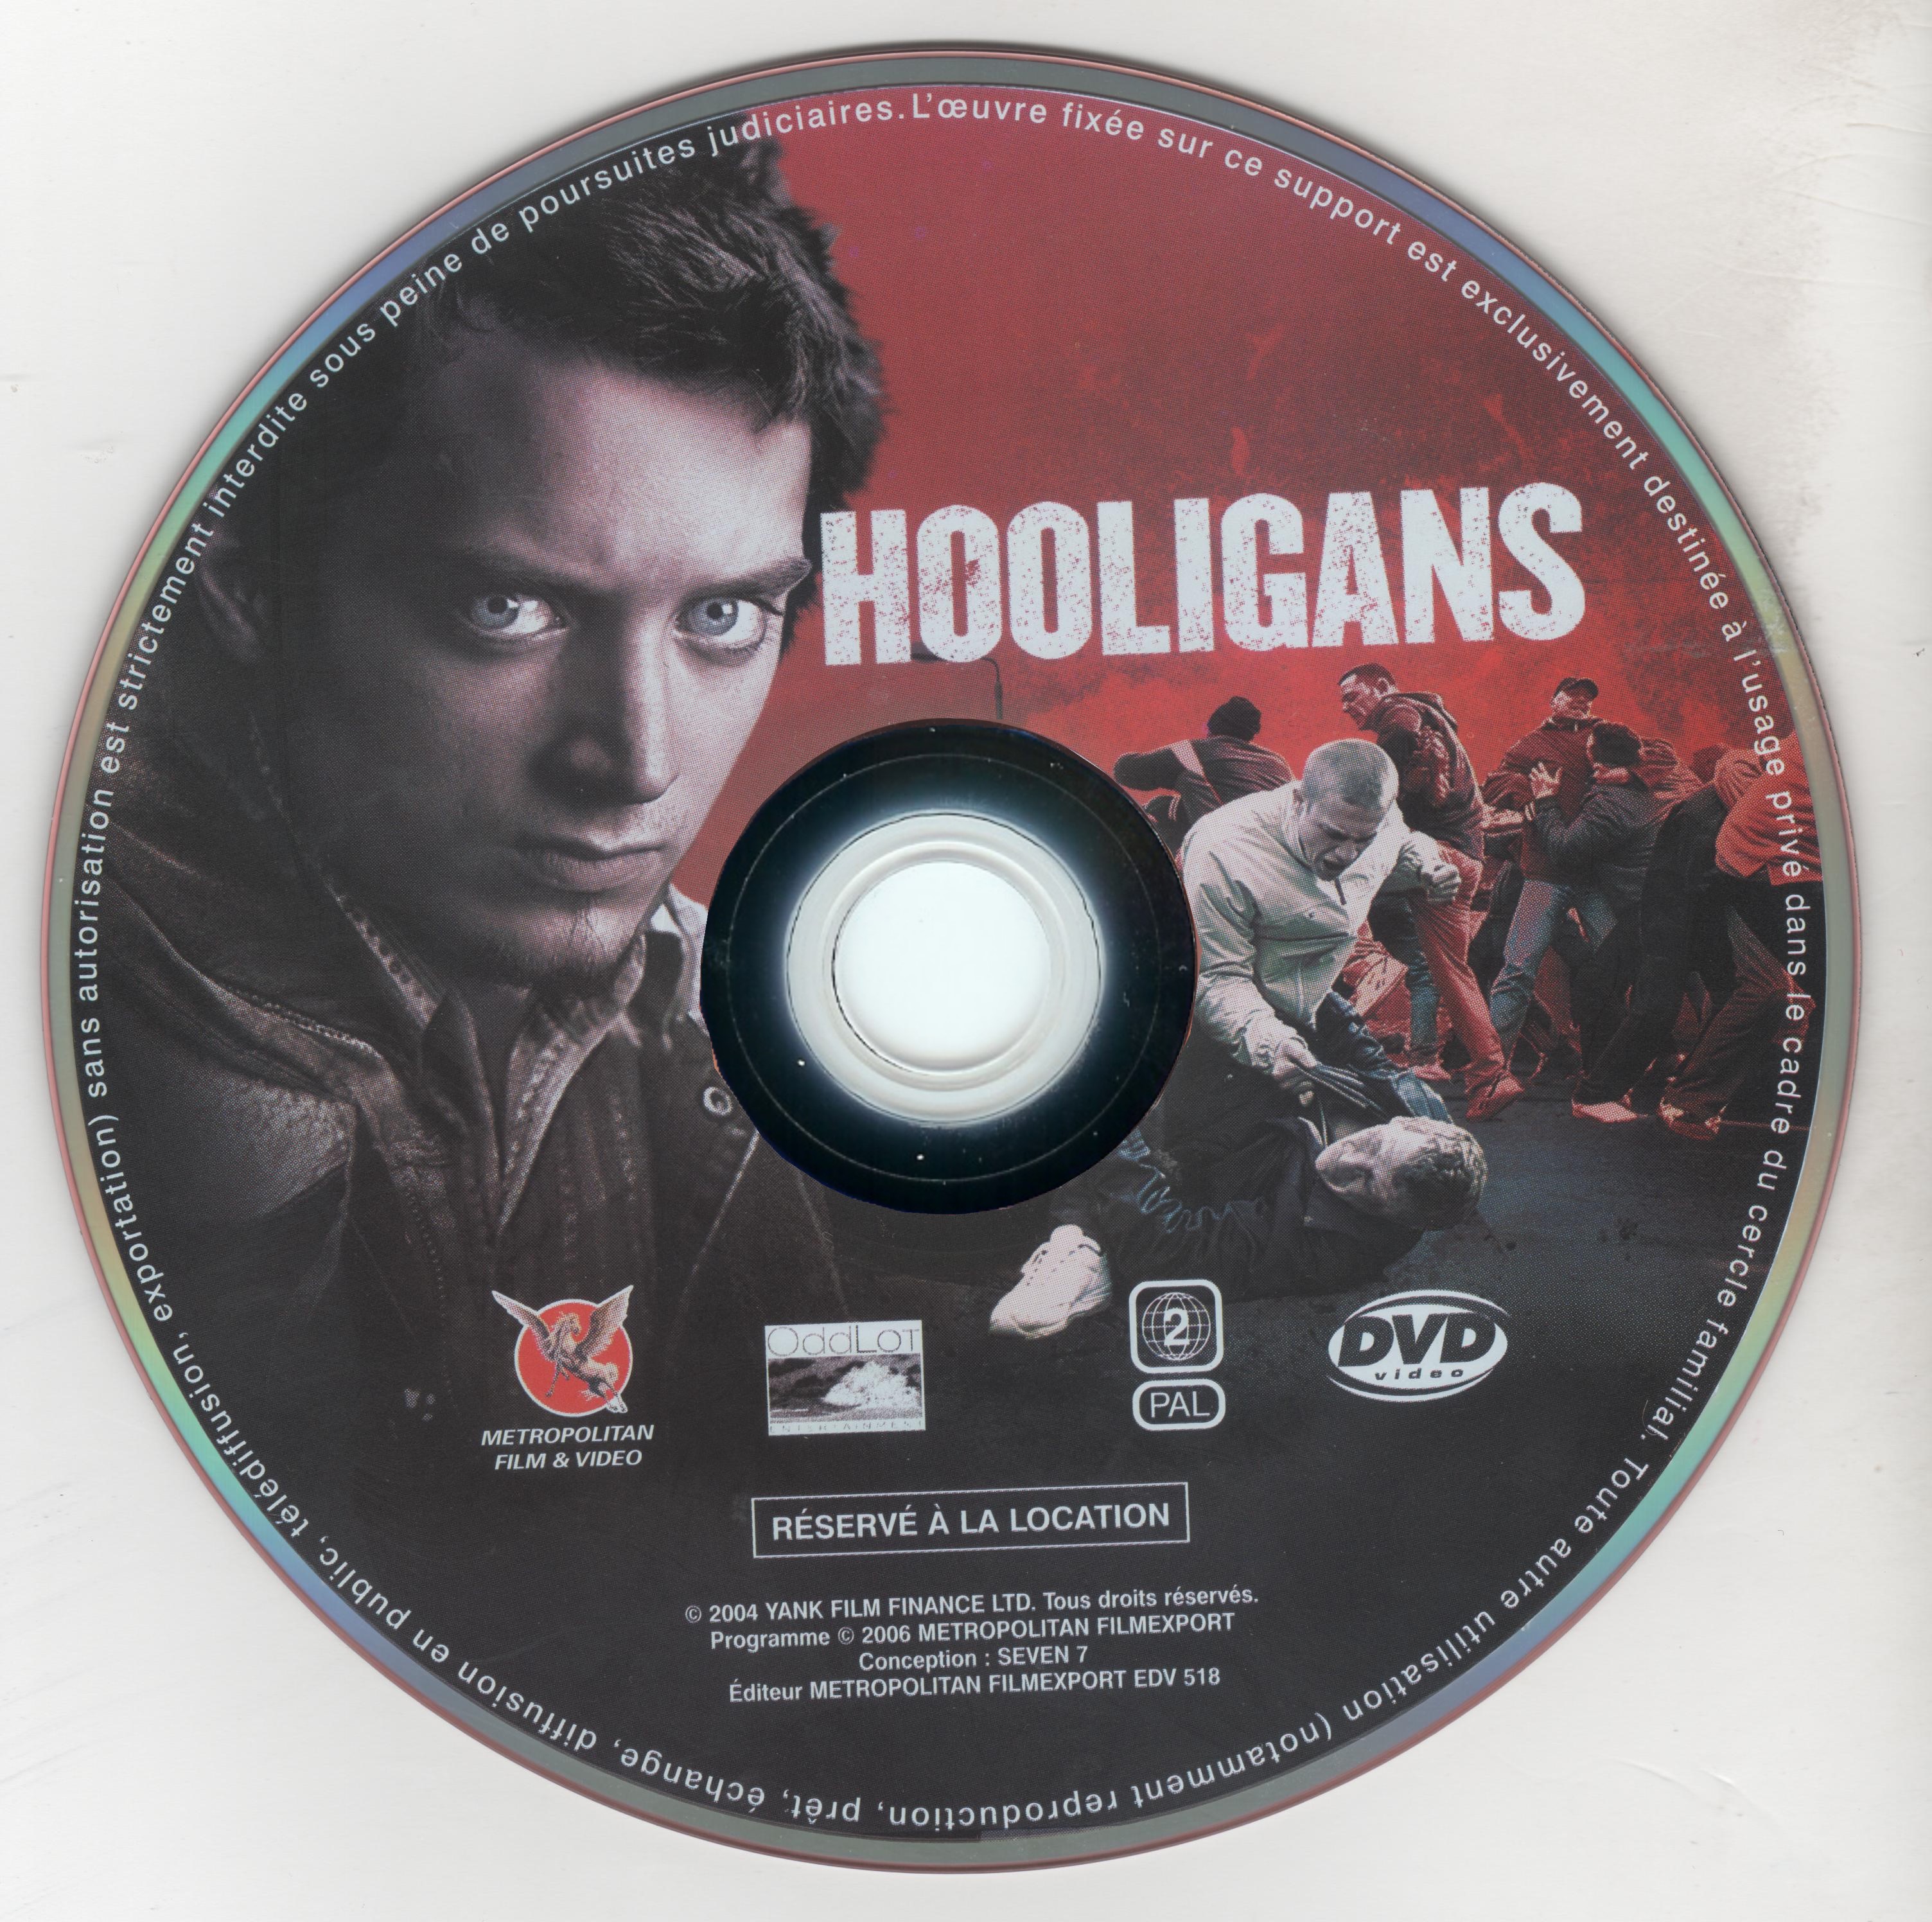 Hooligans (Elijah Wood) v2